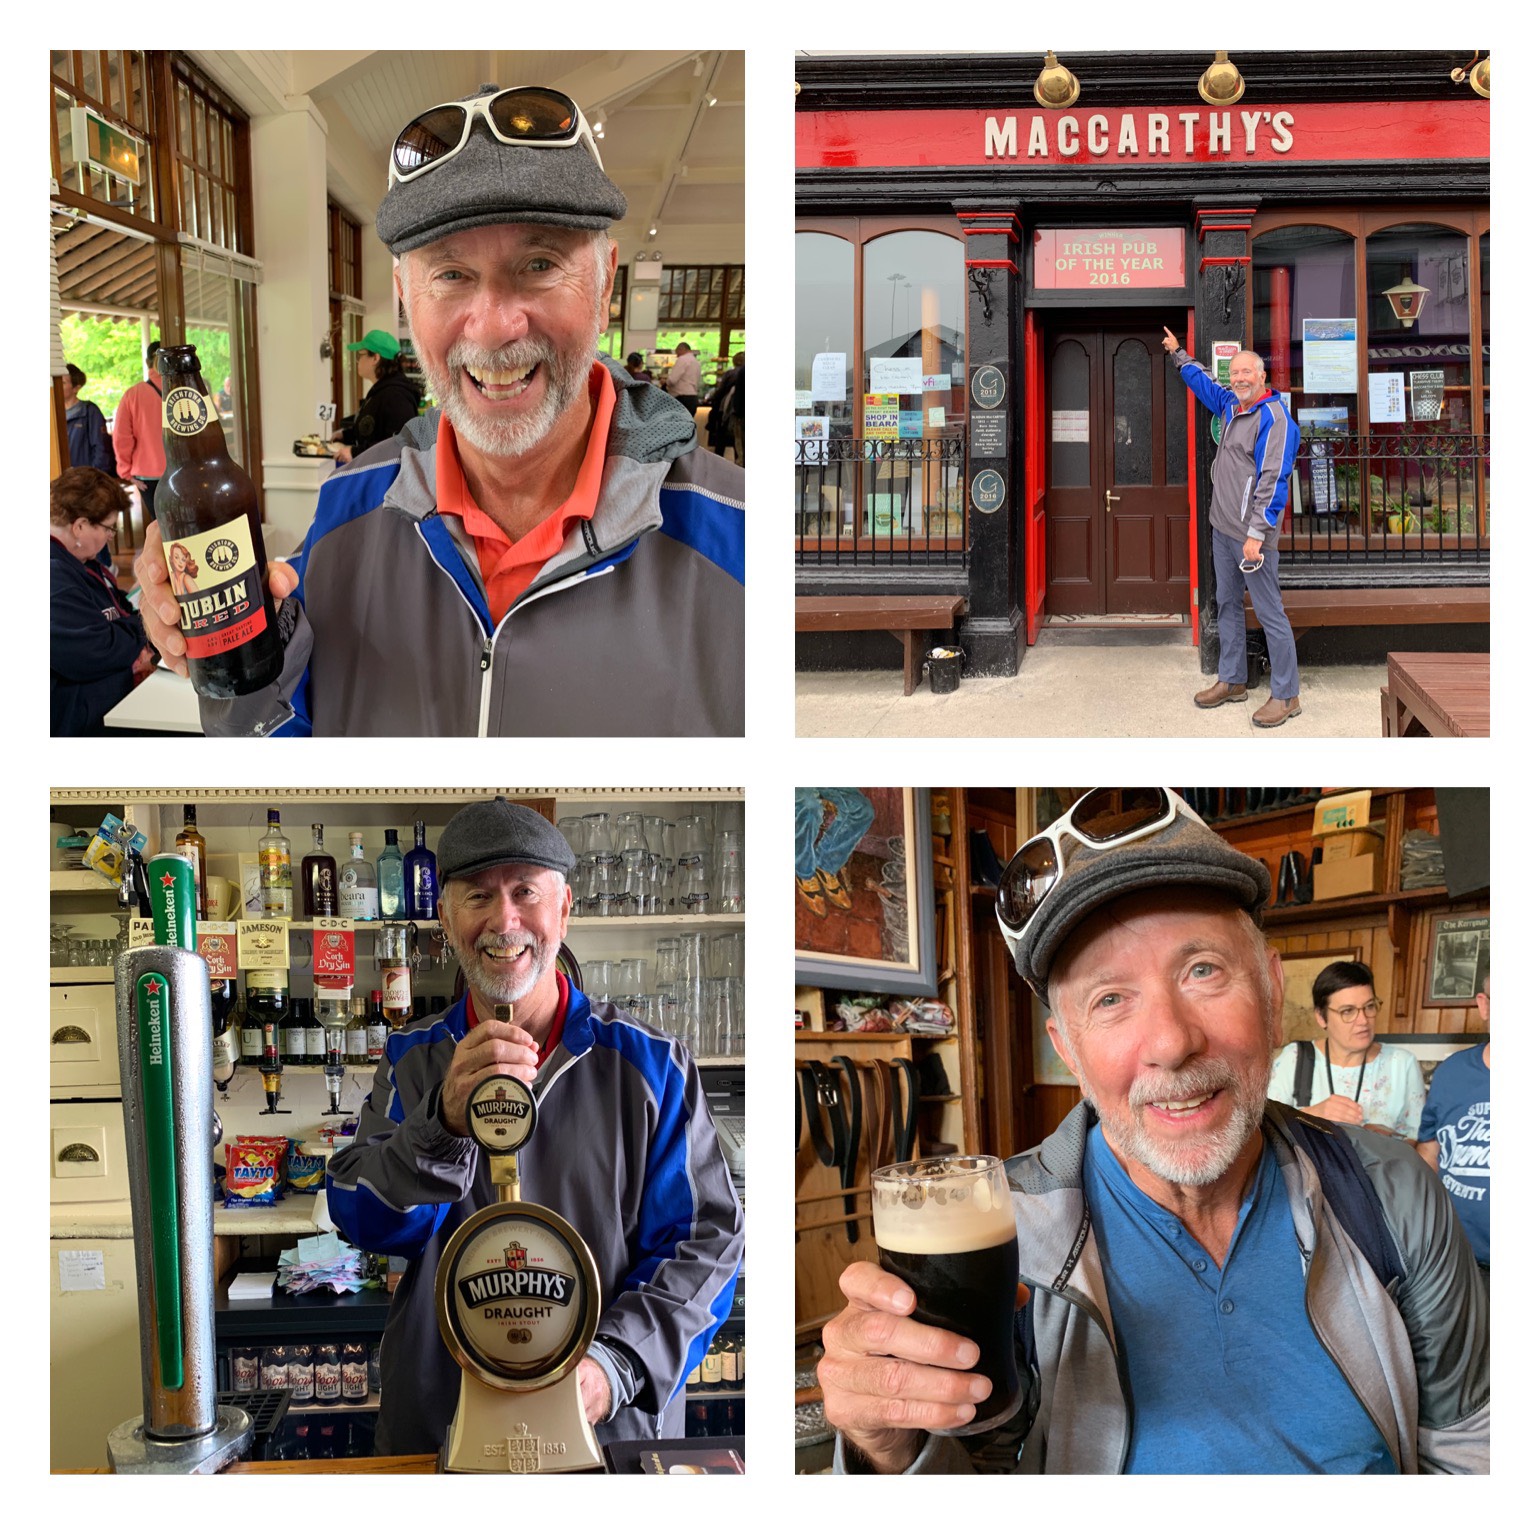 Berl Wyatt enjoying one of many beers in Ireland!